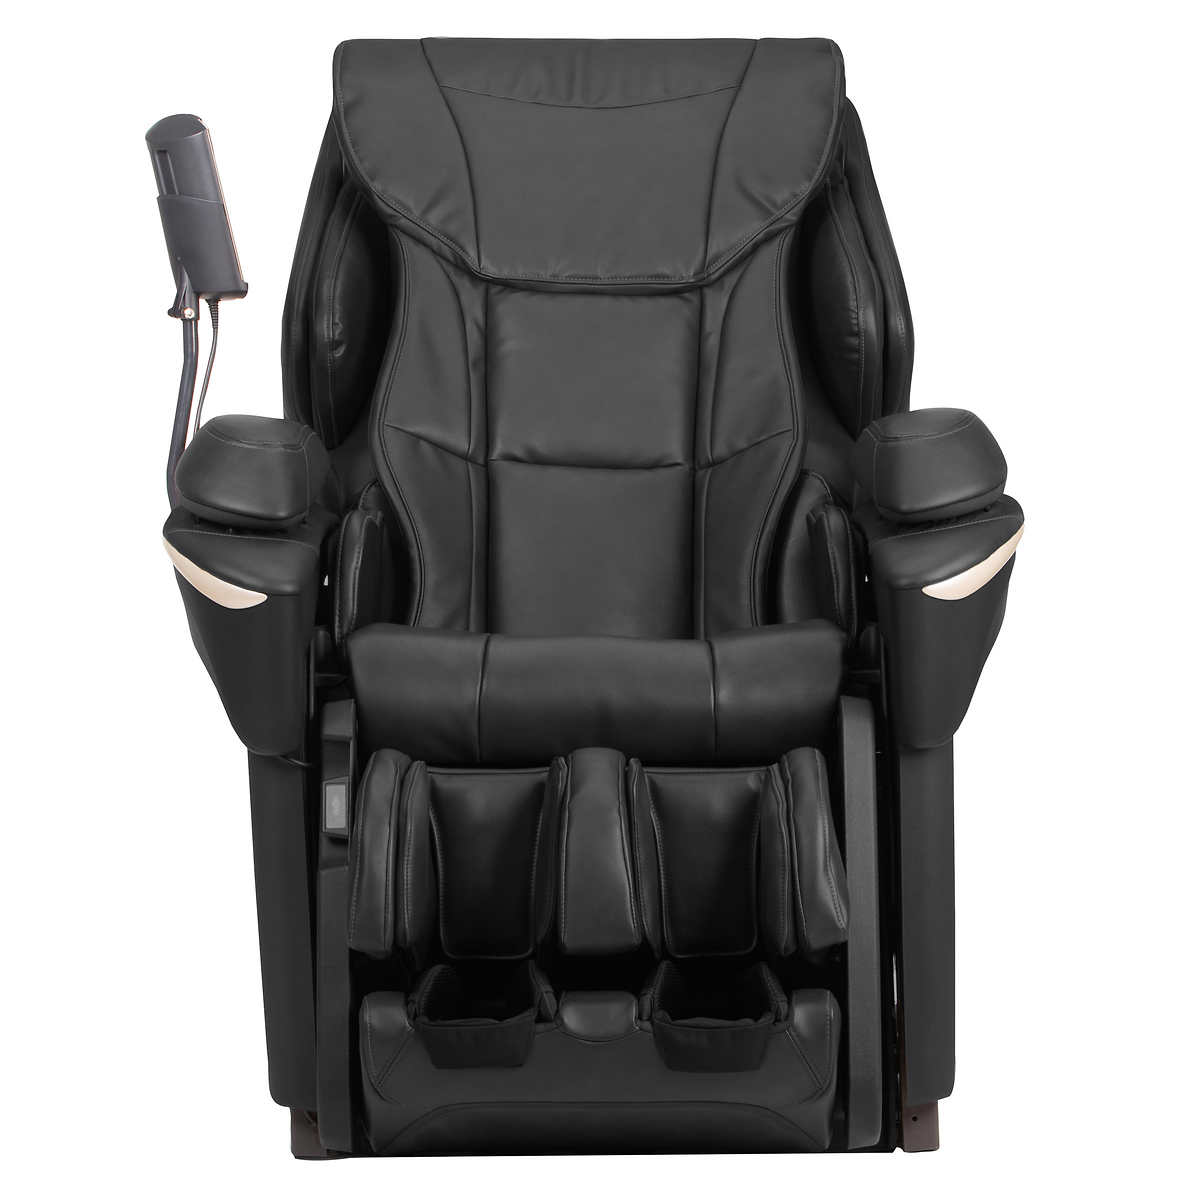 Osaki Os-4000xt Massage Chair Costco Sale - bestlifechanges